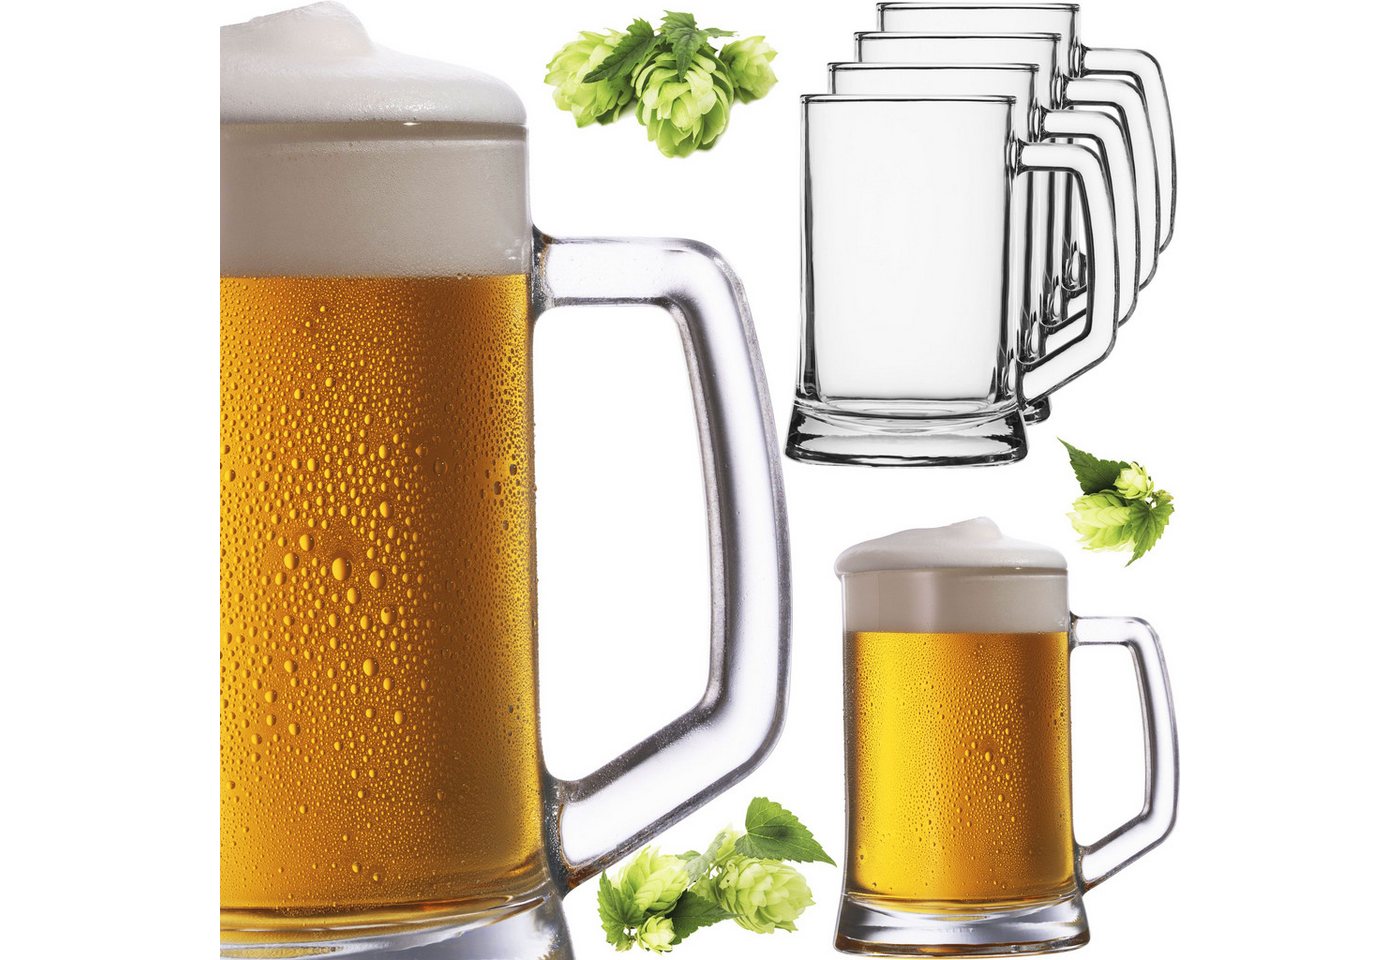 PLATINUX Bierglas Bierseidel mit Henkel, Glas, 0,5 Liter Set 6 Teilig Bierkrüge Biergläser Maßkrug Beer von PLATINUX